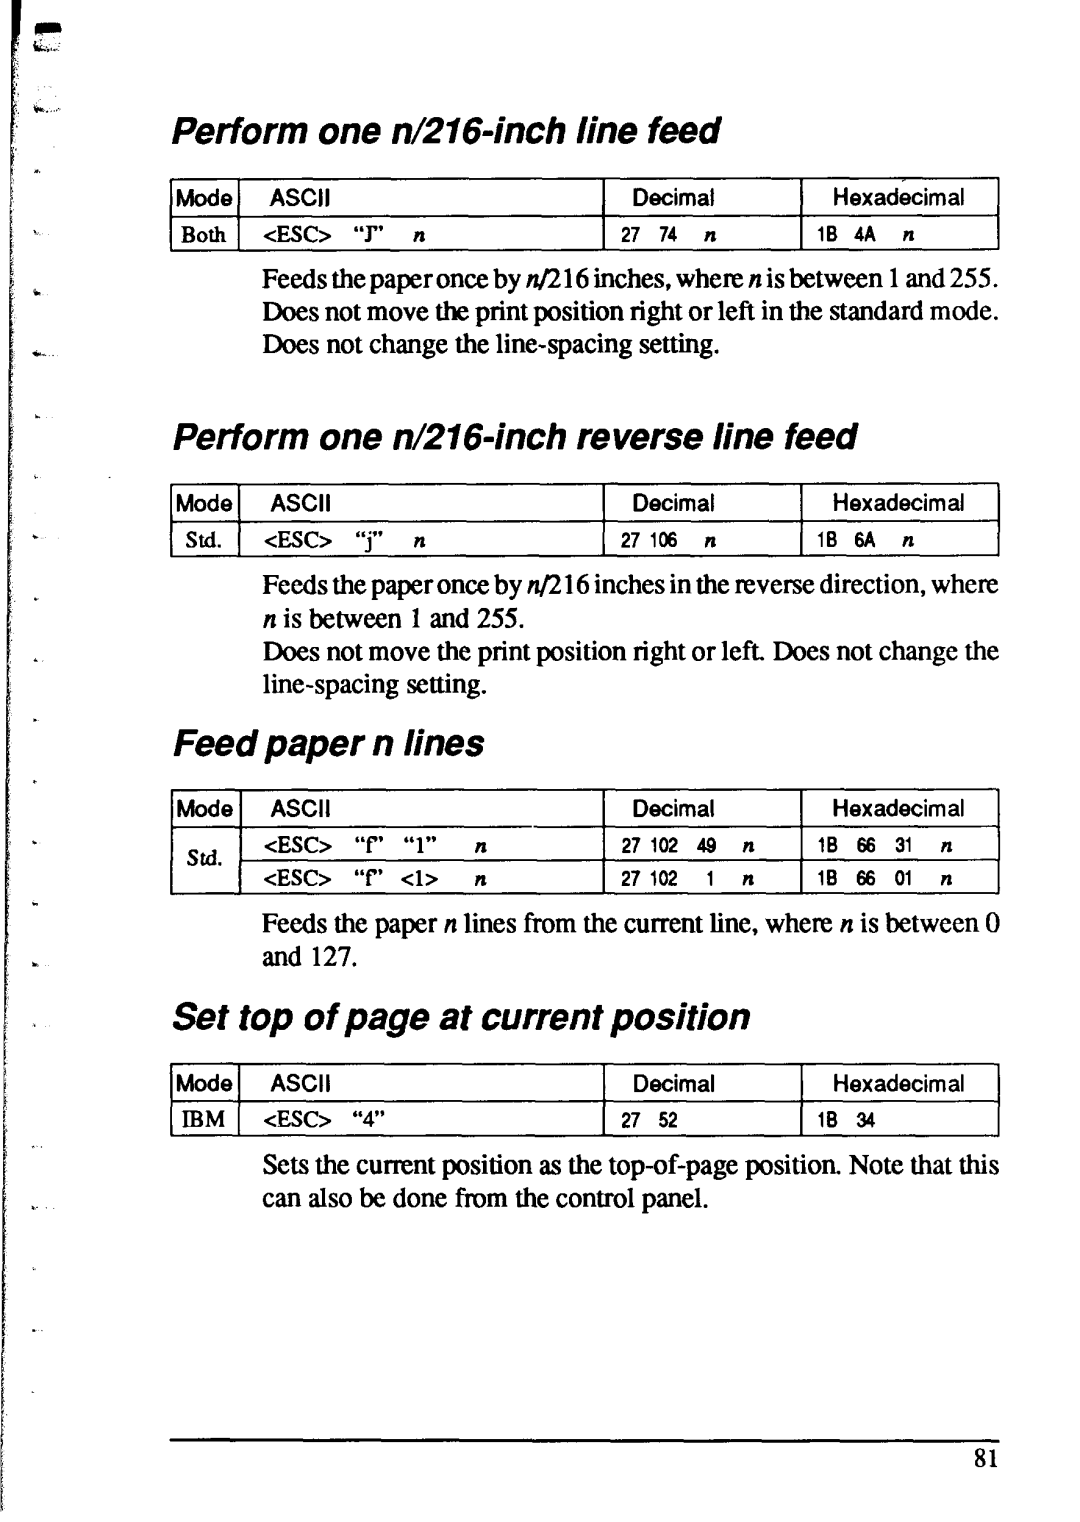 Star Micronics XR-1520 manual Perform one n/216=inchline feed, Perform one n/216=inchreverse line feed, Feed paper n lines 